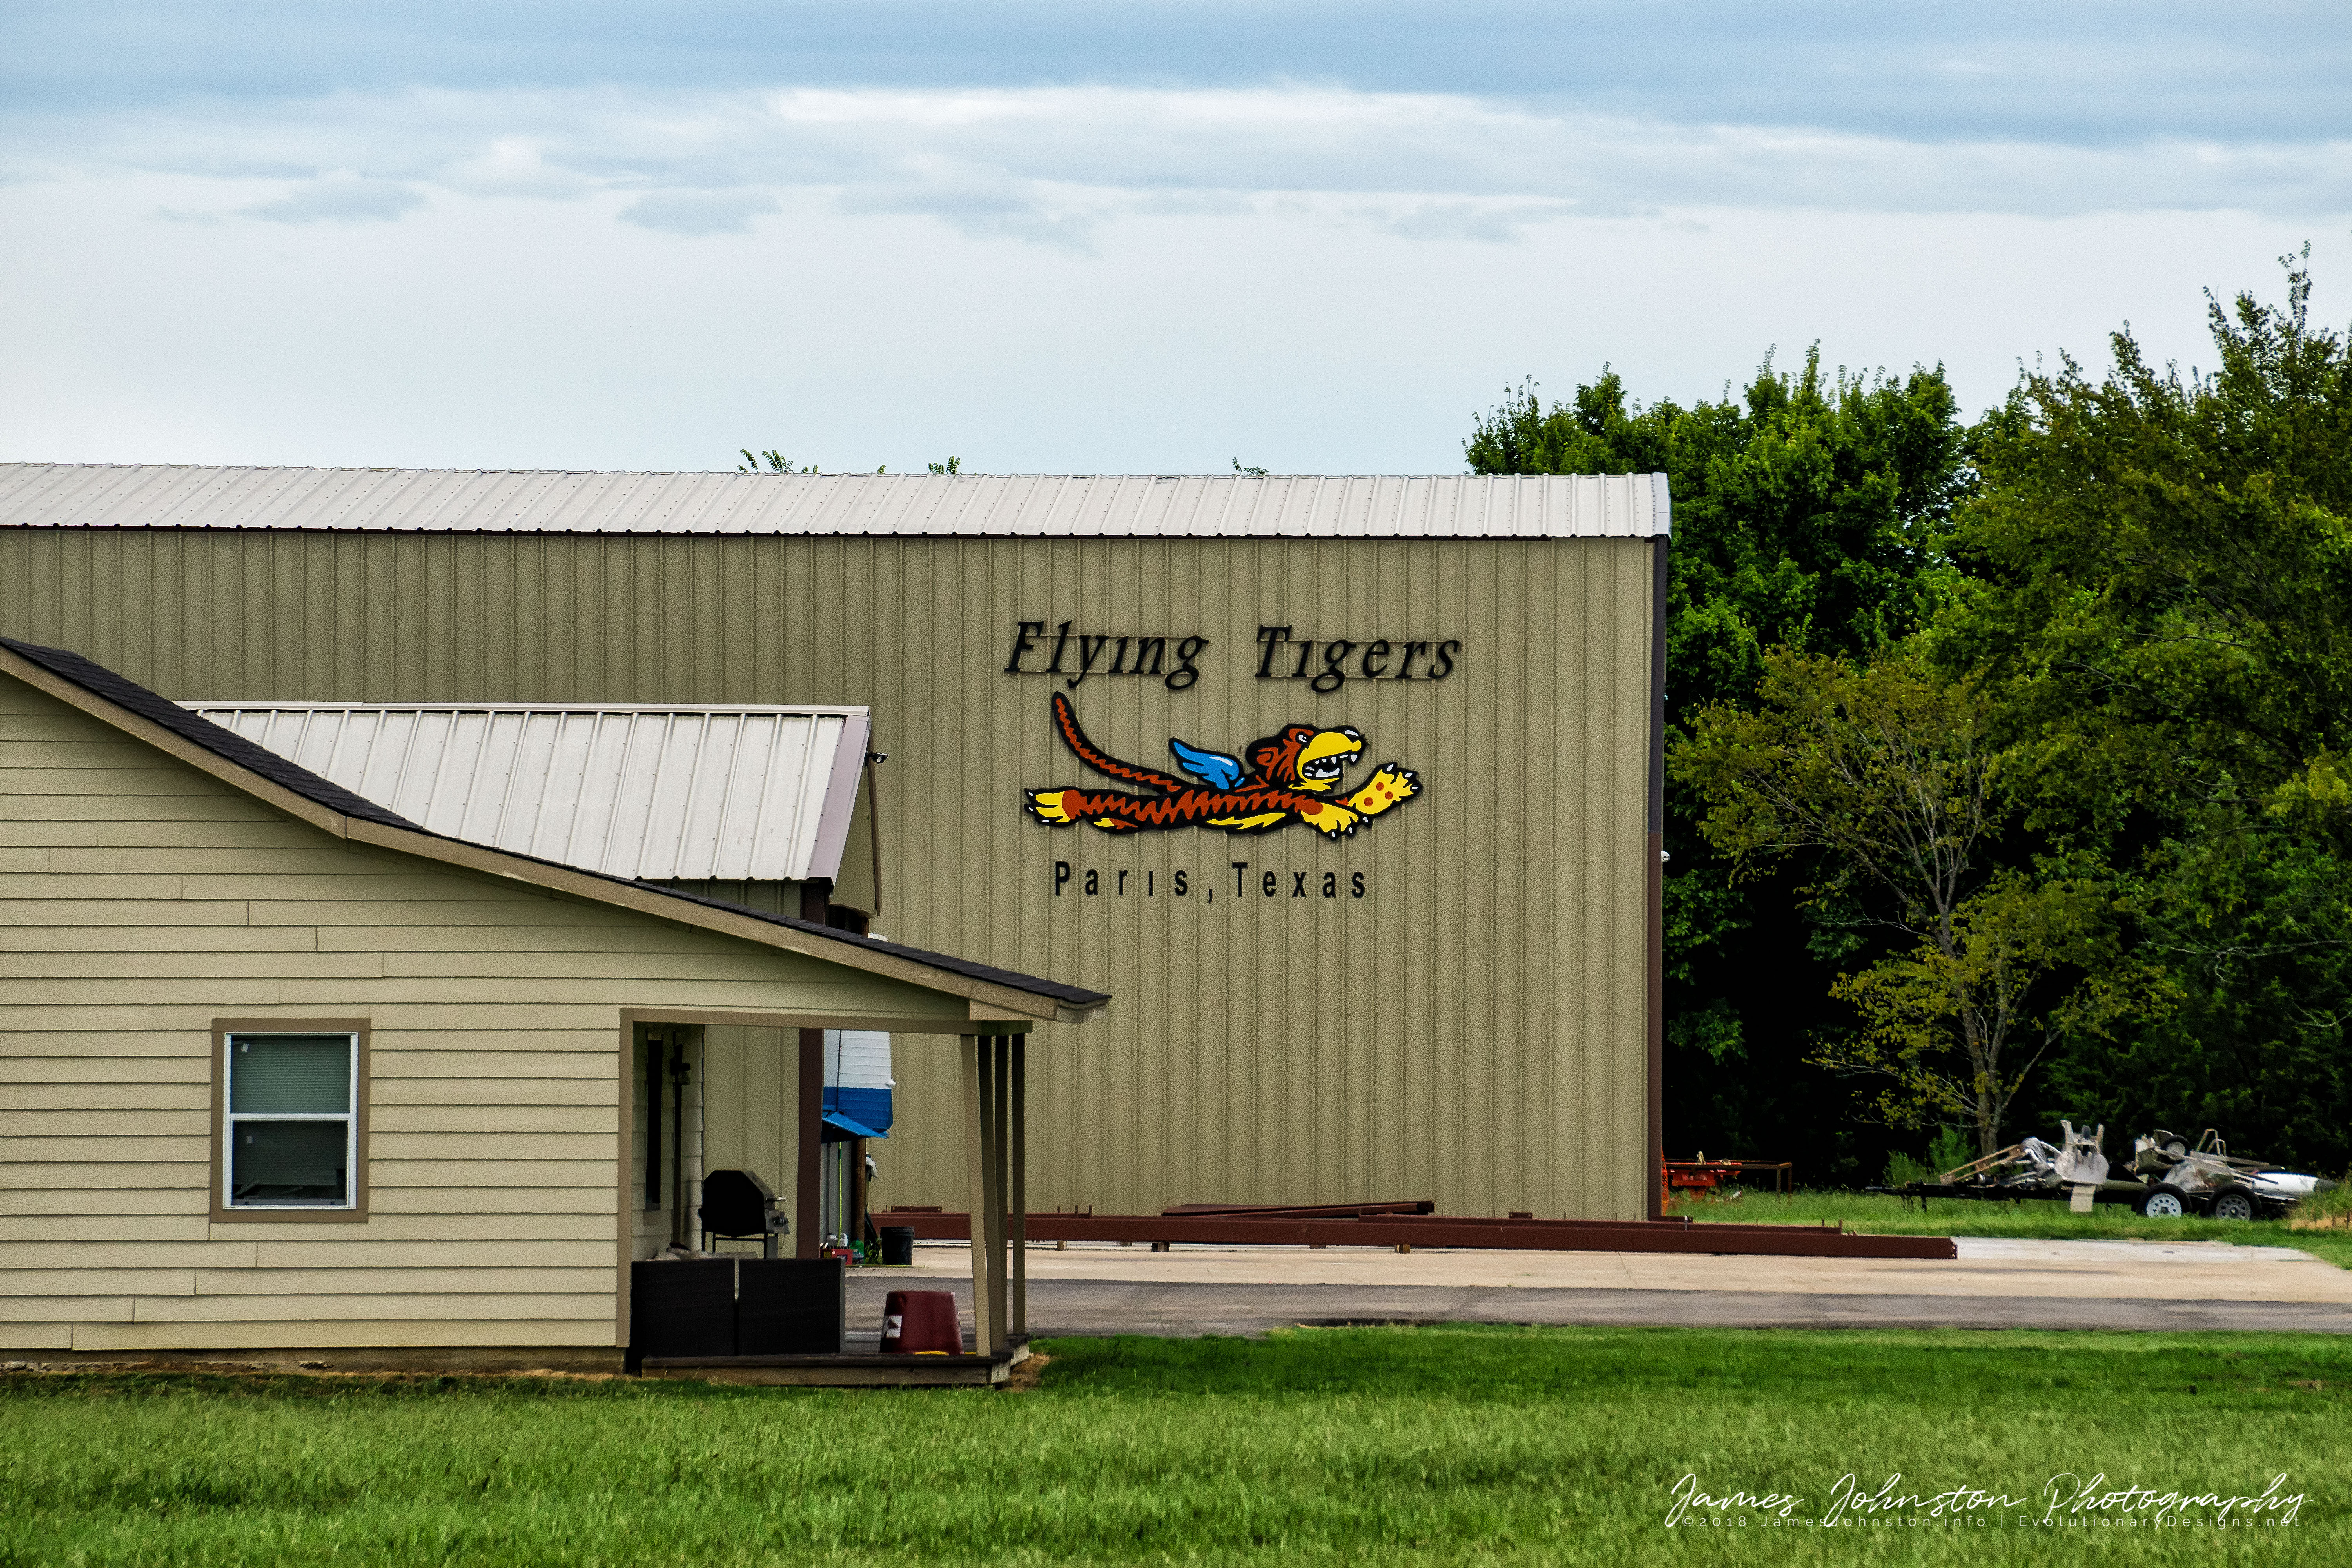 Flying Tiger Airport & Flight Museum in Paris, Texas